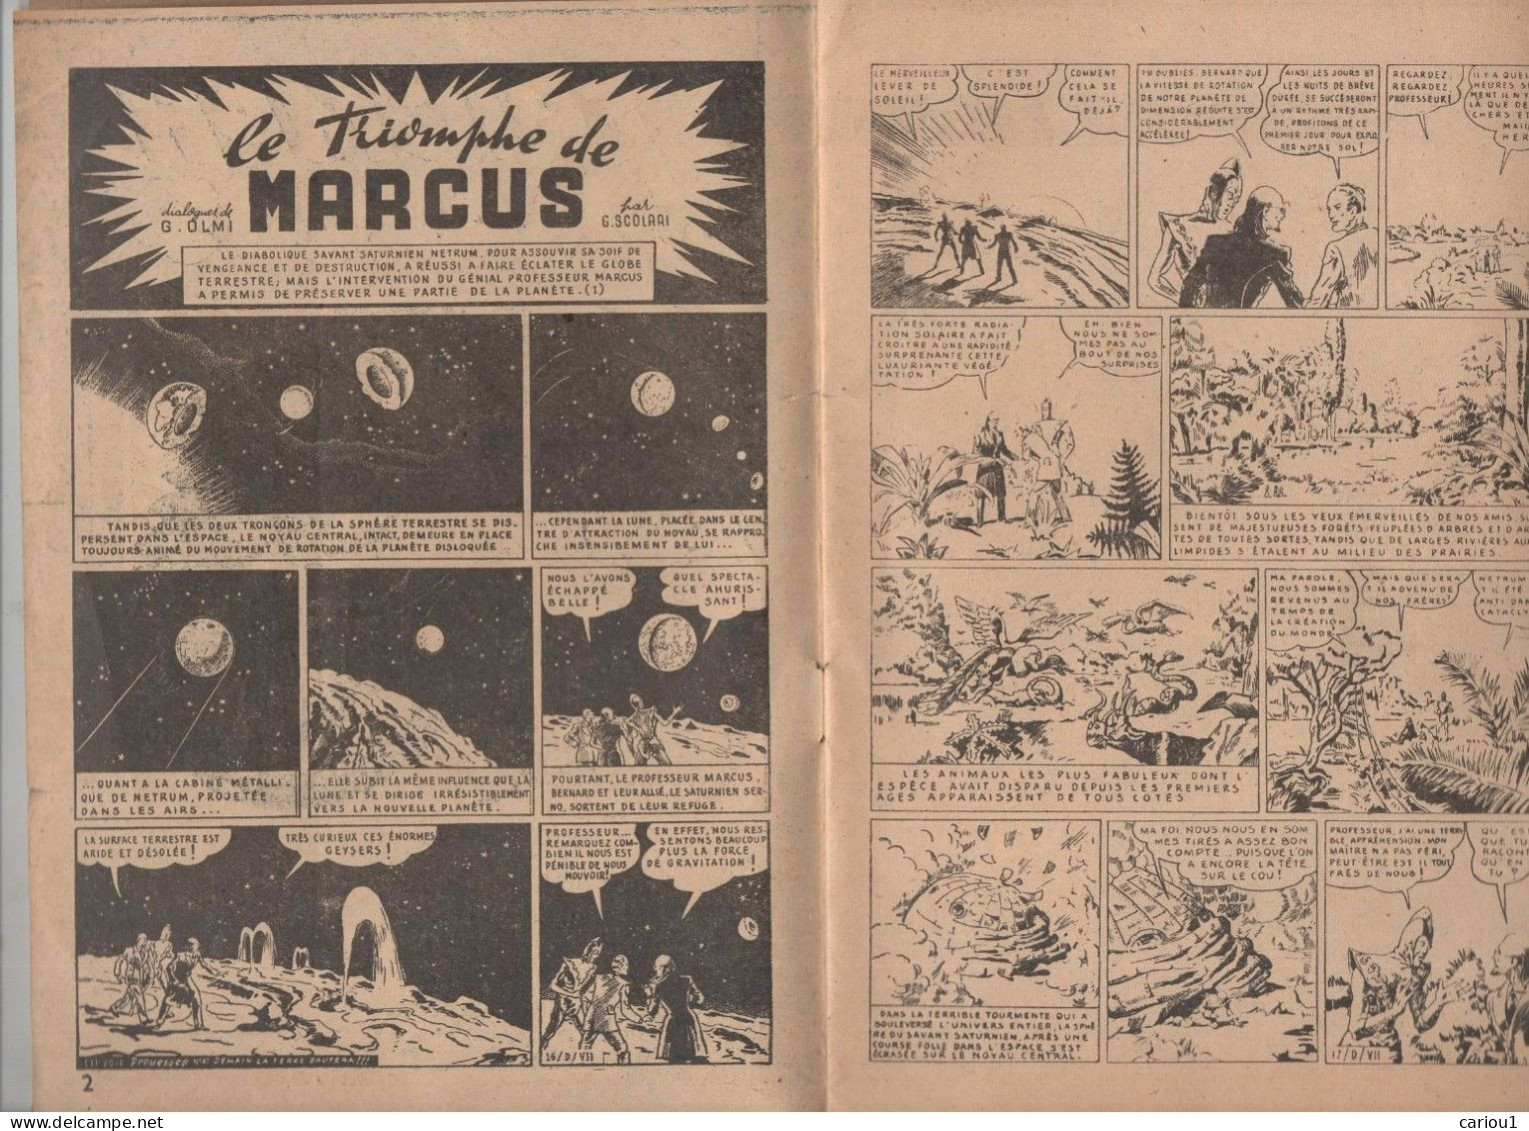 C1 SCOLARI Triomphe Marcus SELECTIONS PROUESSES # 2 1948 Saturne Contre Terre SF Port Inclus France - Originalausgaben - Franz. Sprache